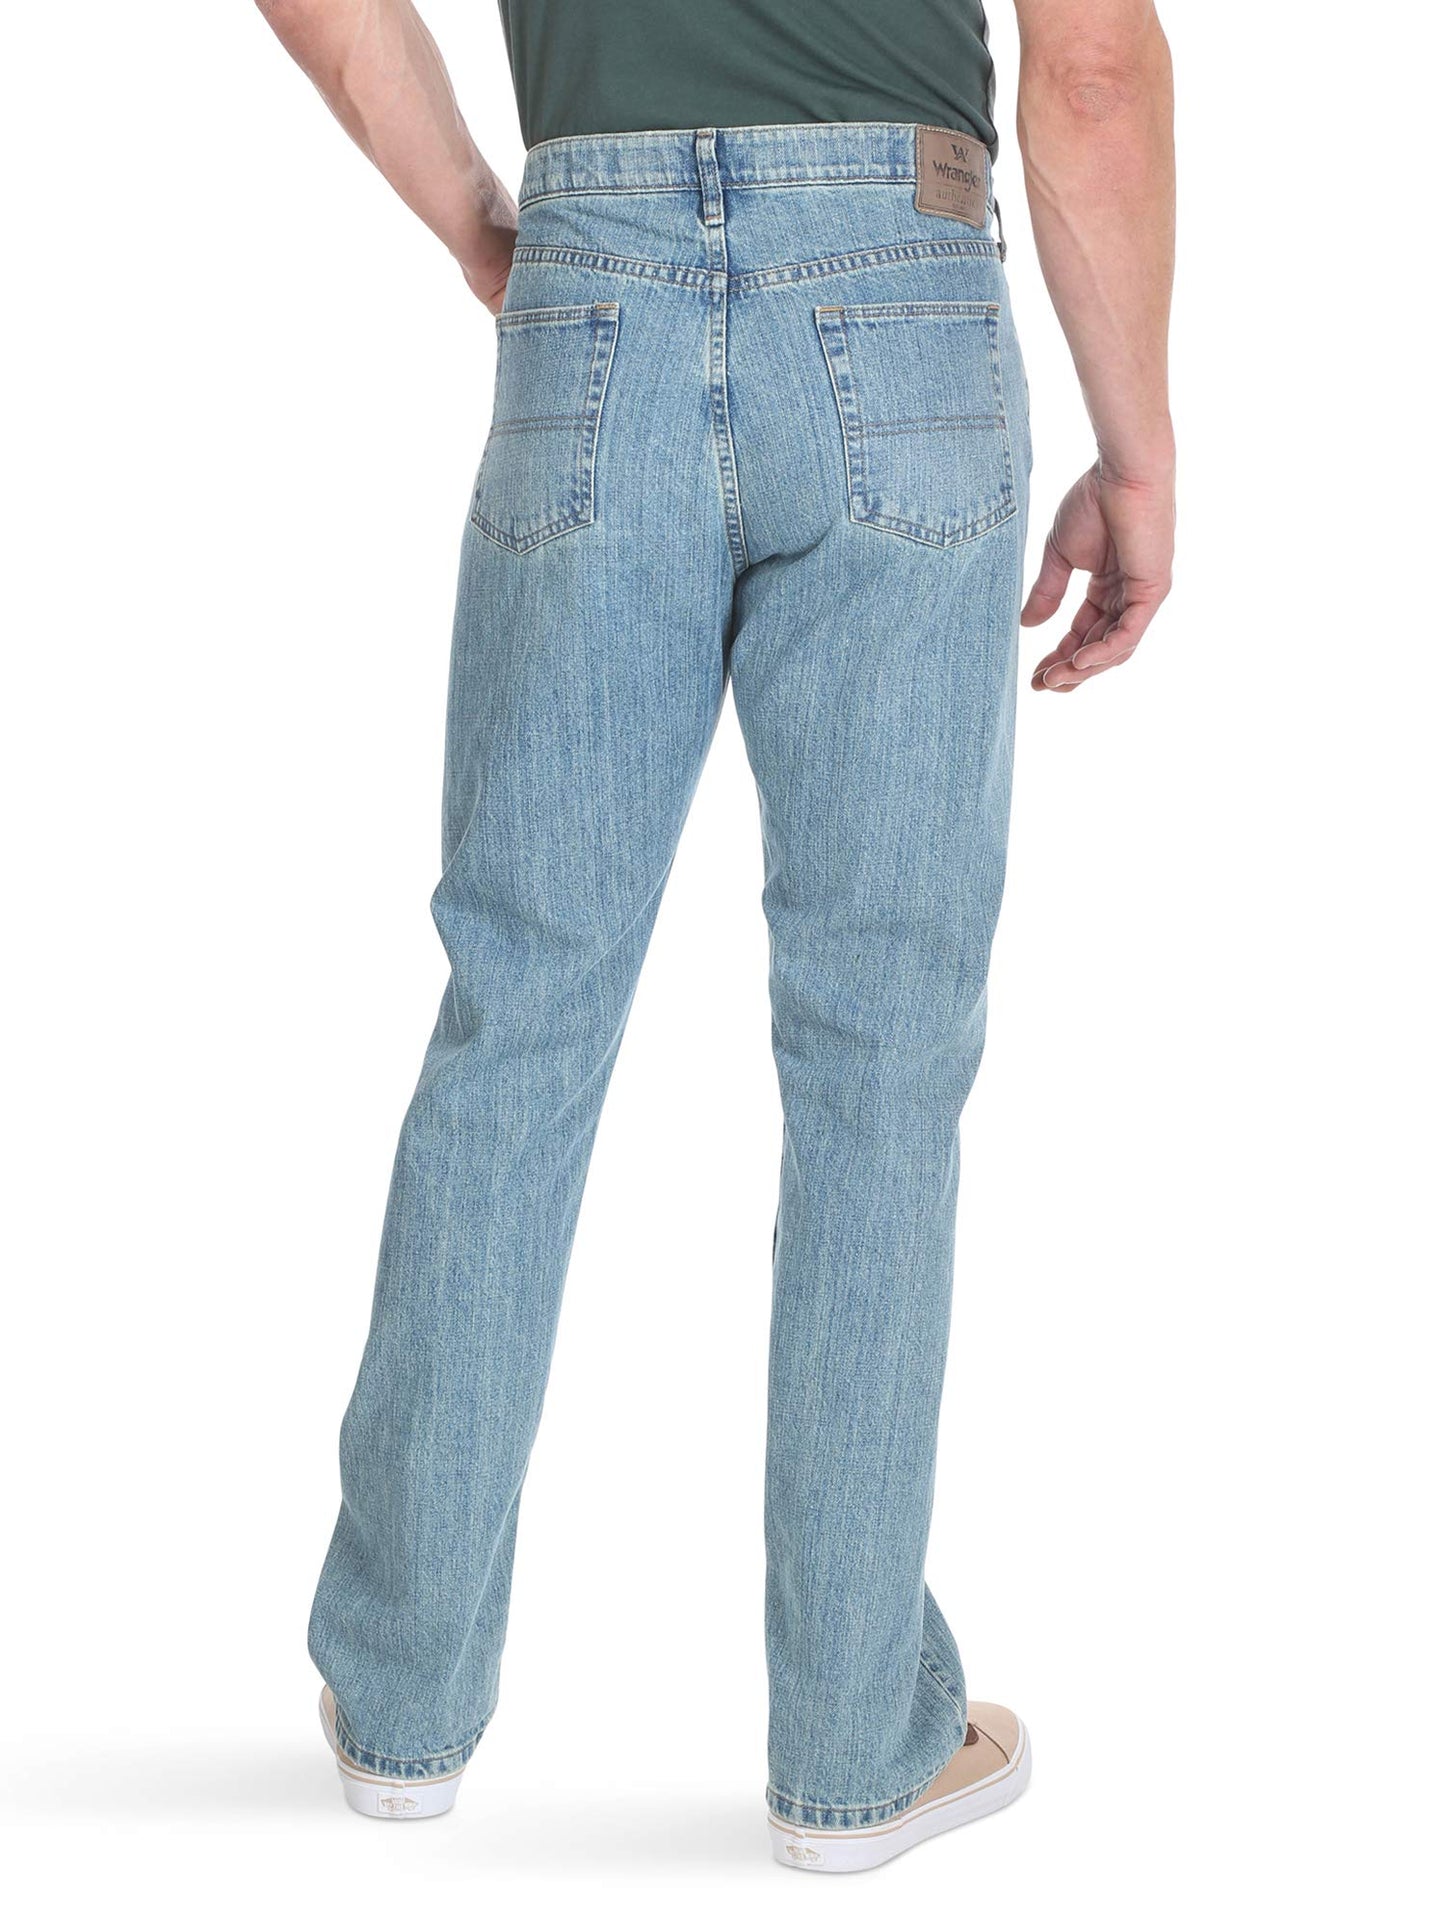 Wrangler Authentics Men's Regular Fit Comfort Flex Waist Jean, Chalk Blue, 42W x 32L